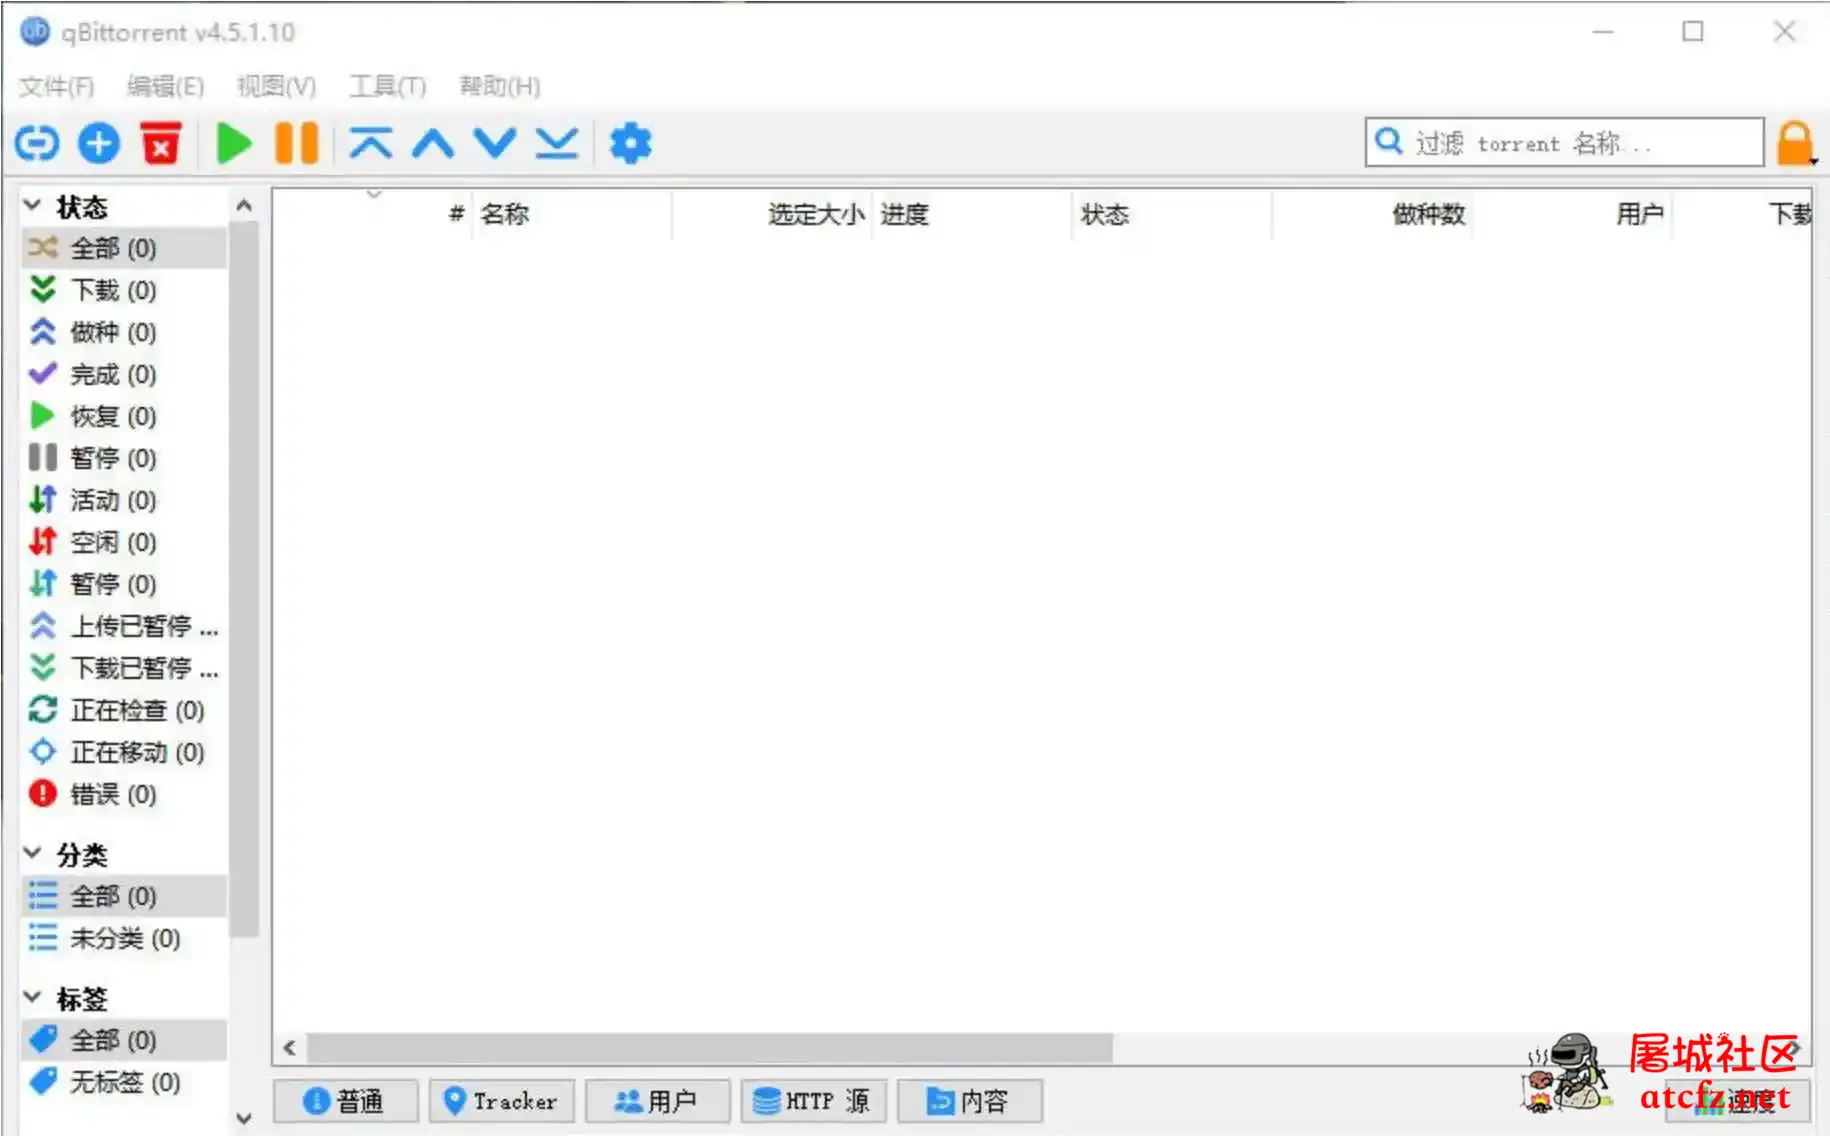 qBittorrent v4.5.3.10增强便携版BT种子下载工具 屠城辅助网www.tcfz1.com8727